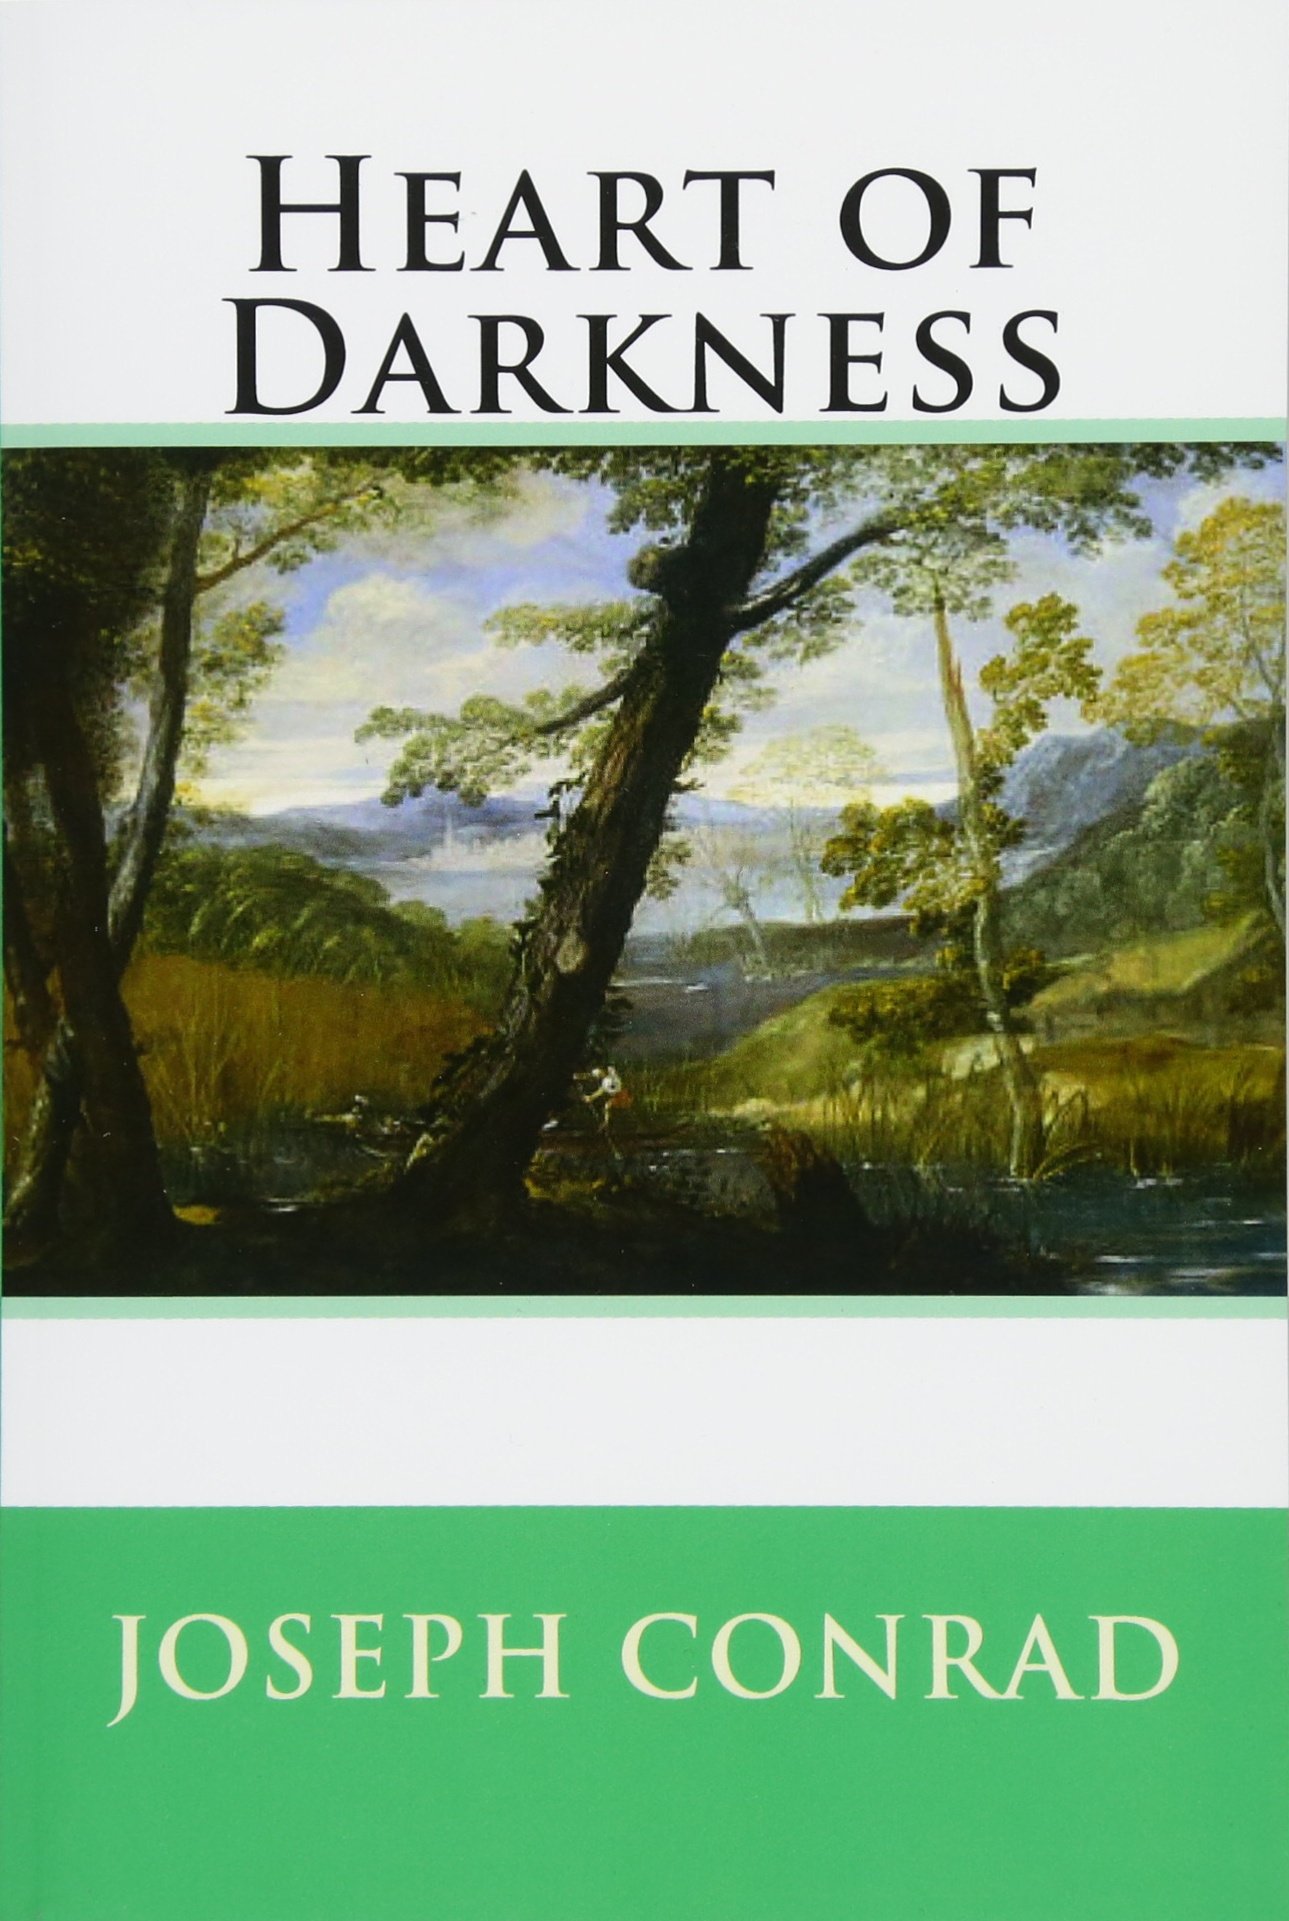 Heart of Darkness - listen book free online